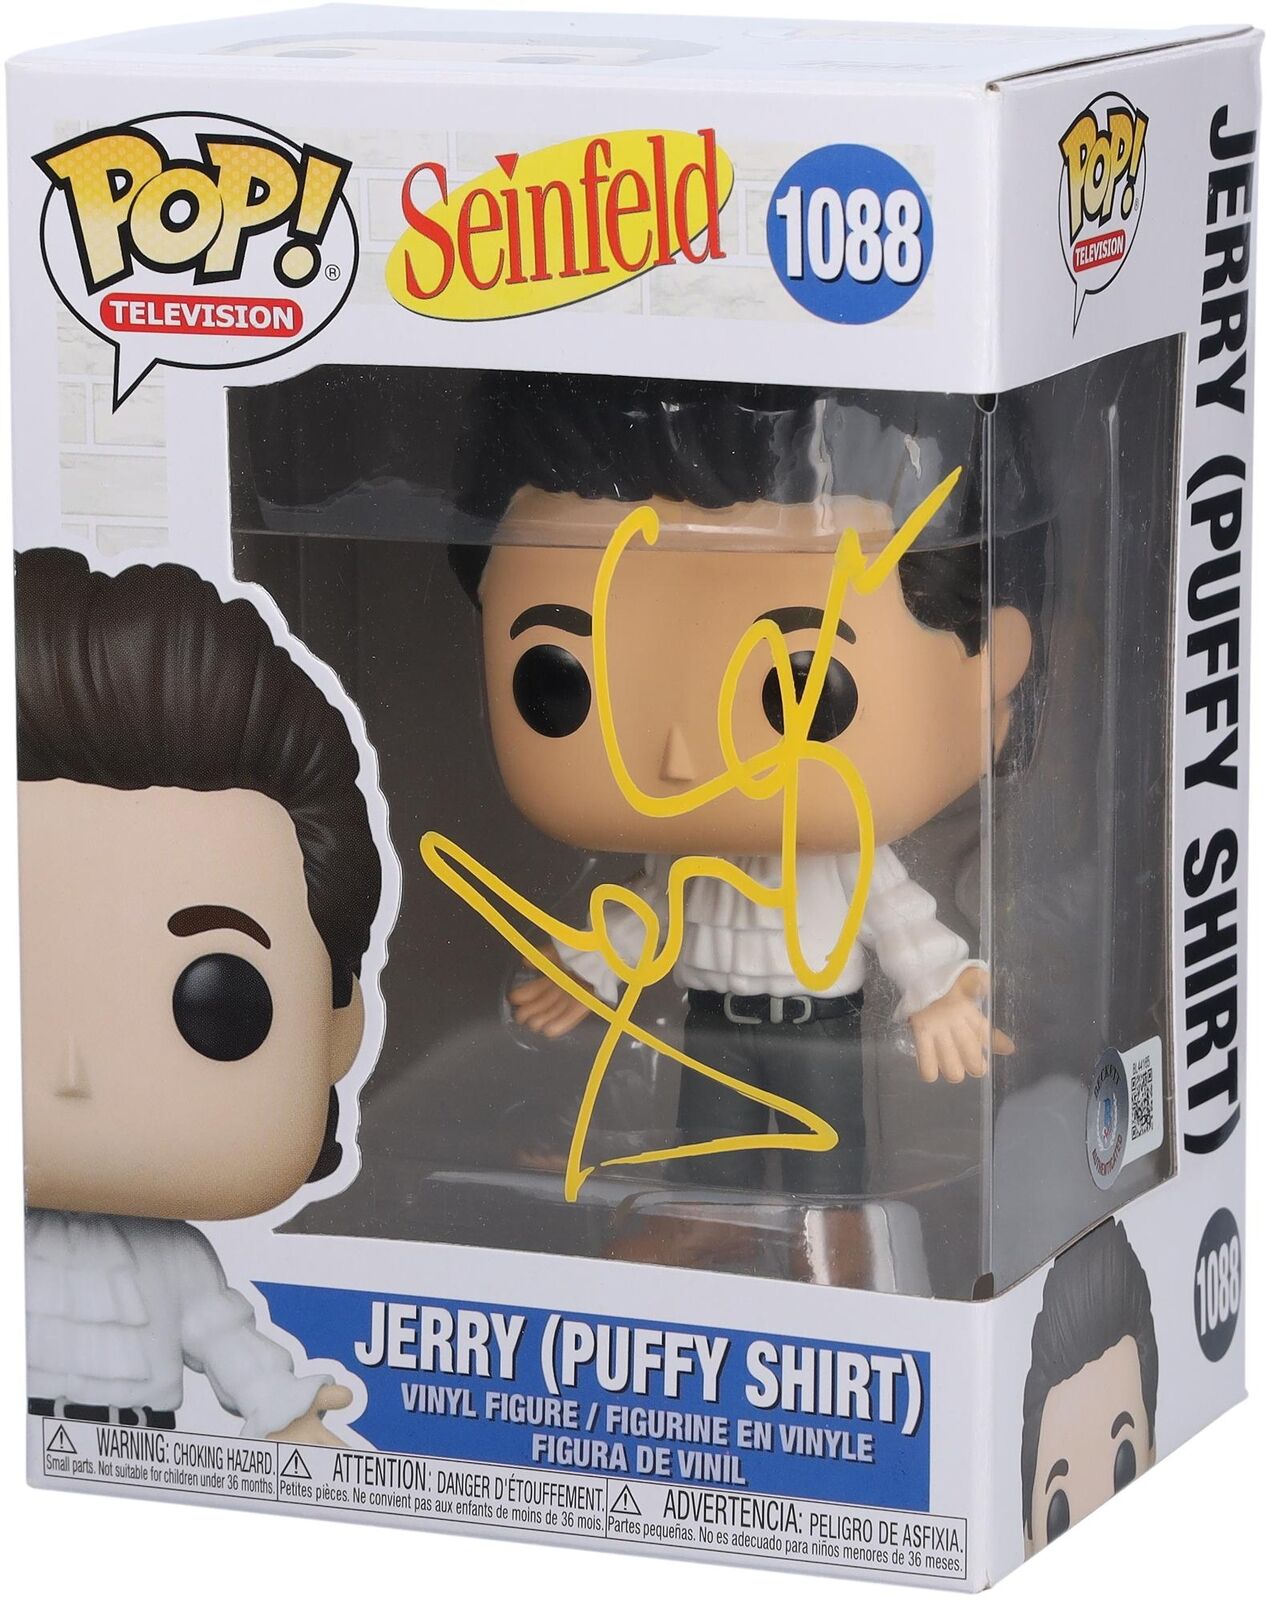 Jerry Seinfeld Seinfeld TV Figurine